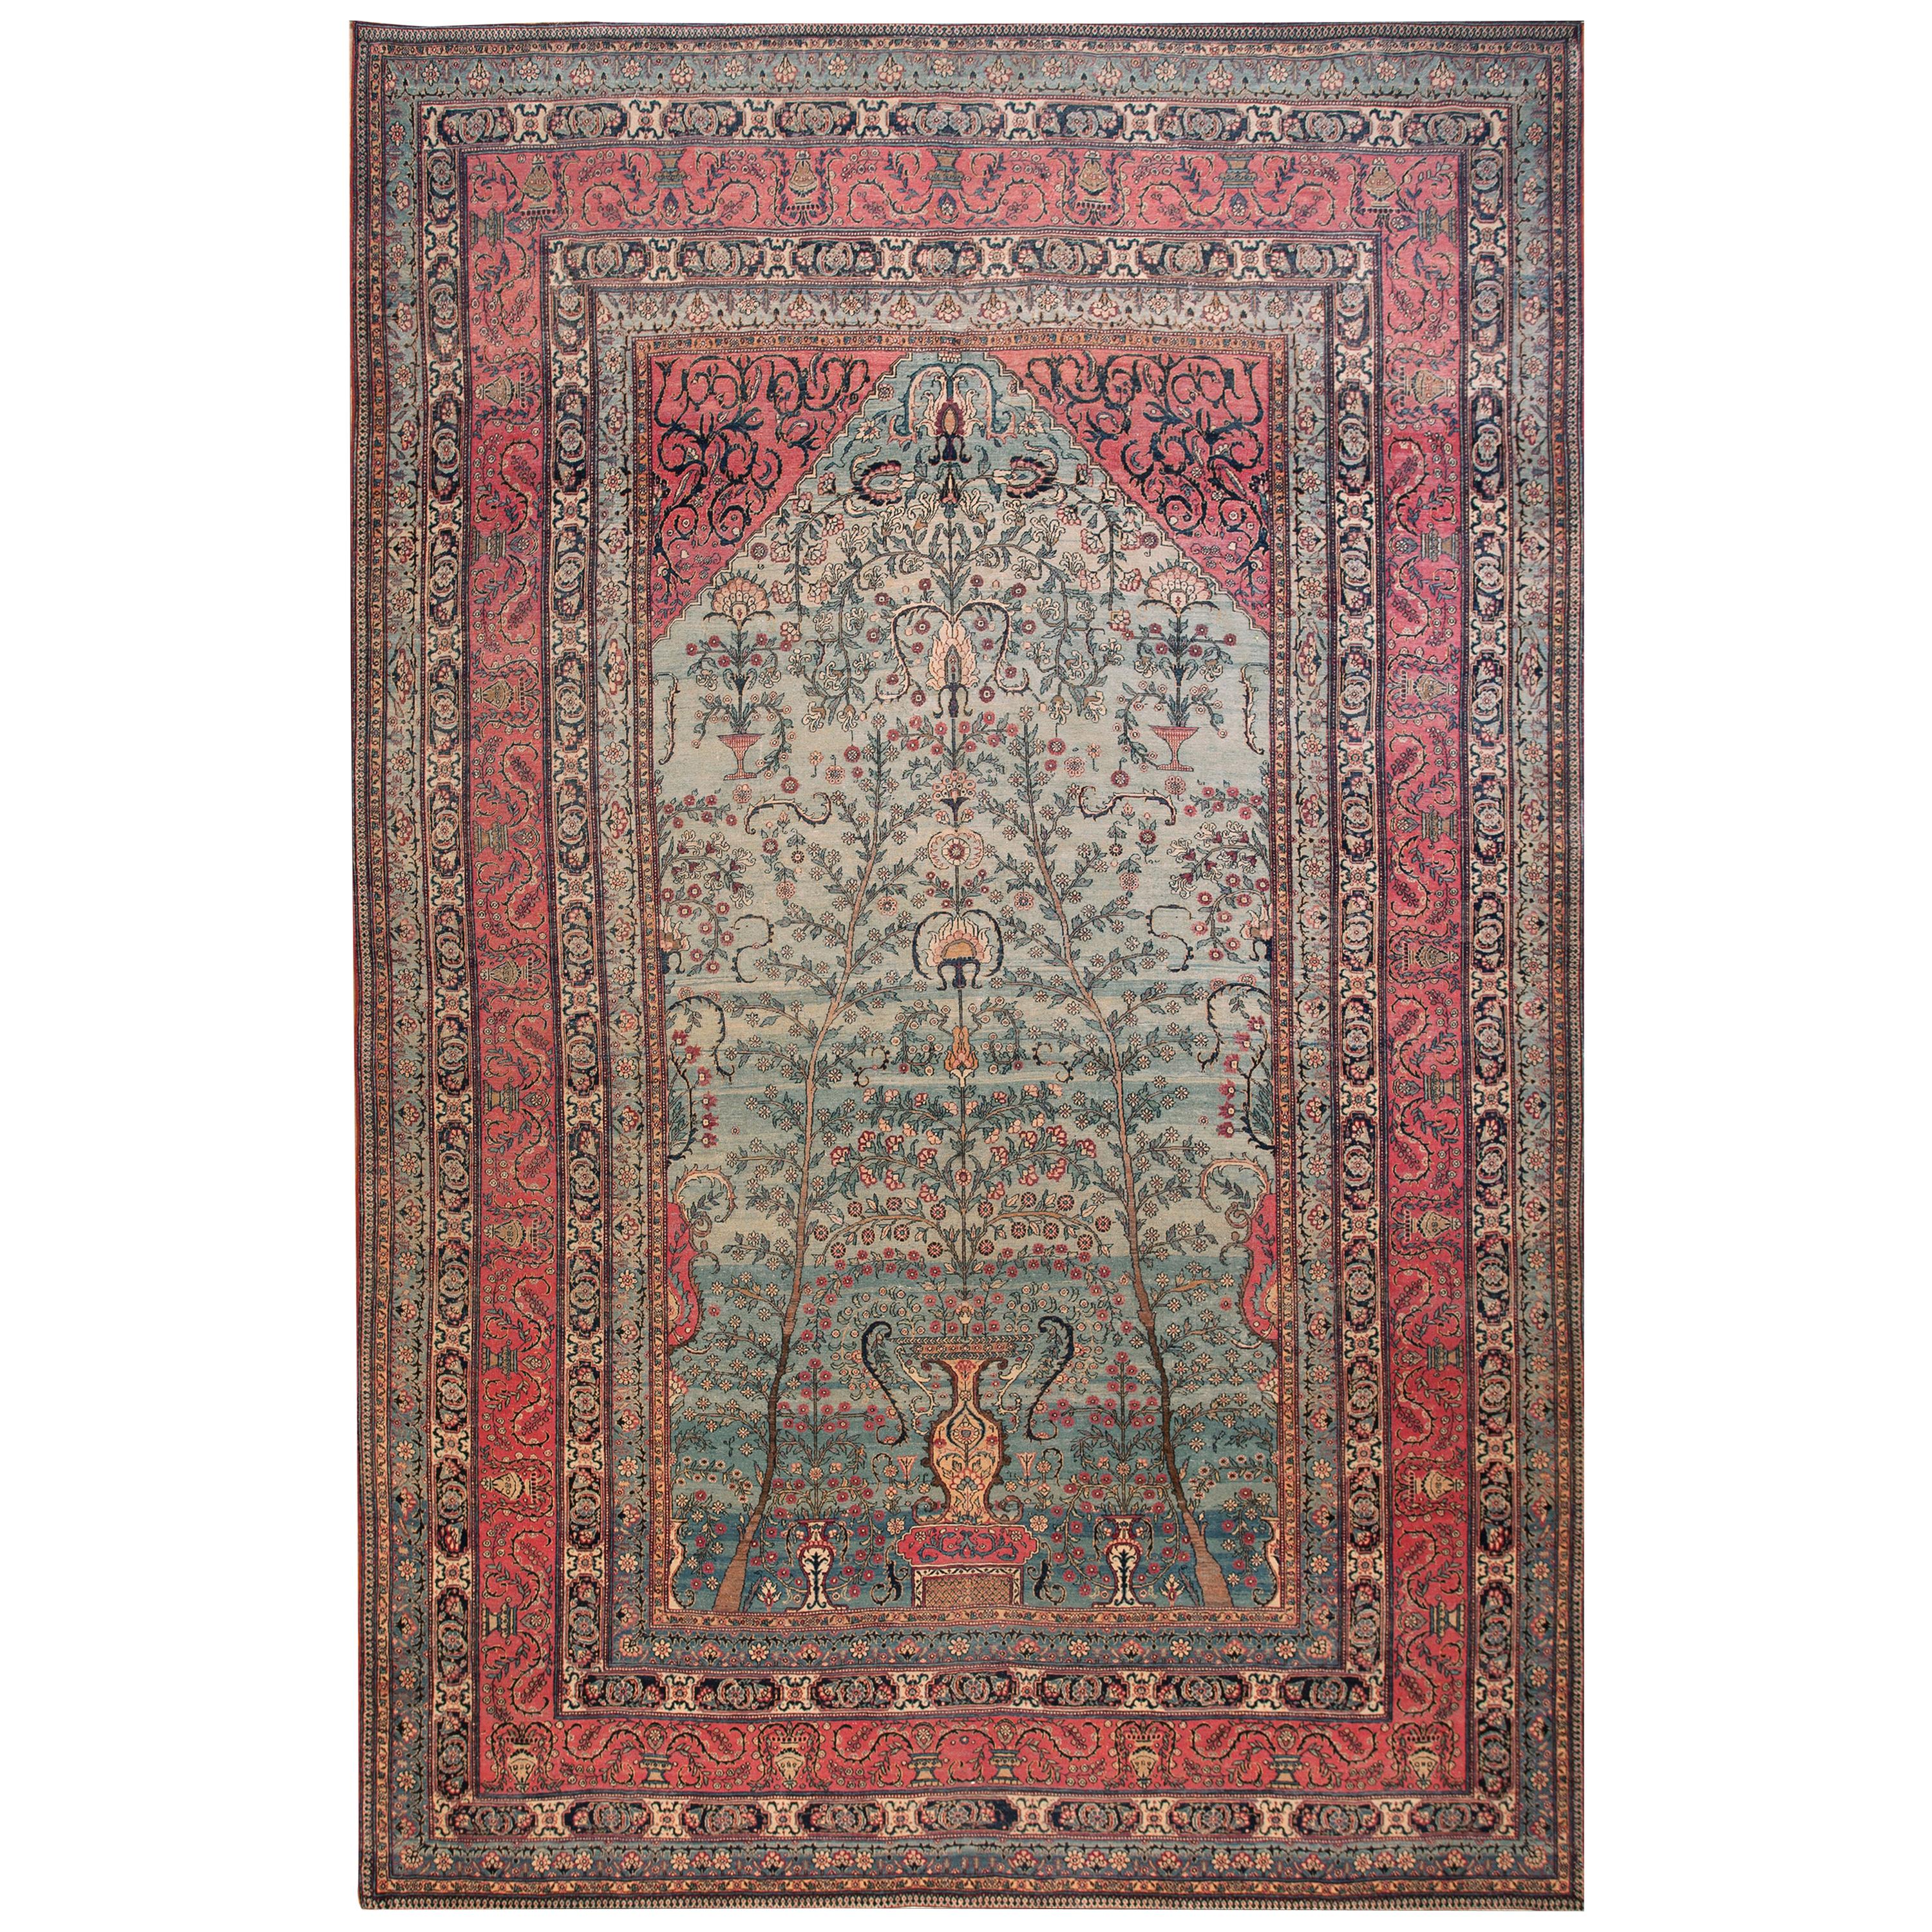 Late 19th Century Persian Tehran Carpet ( 9'6" x 13'10" - 290 x 422 )